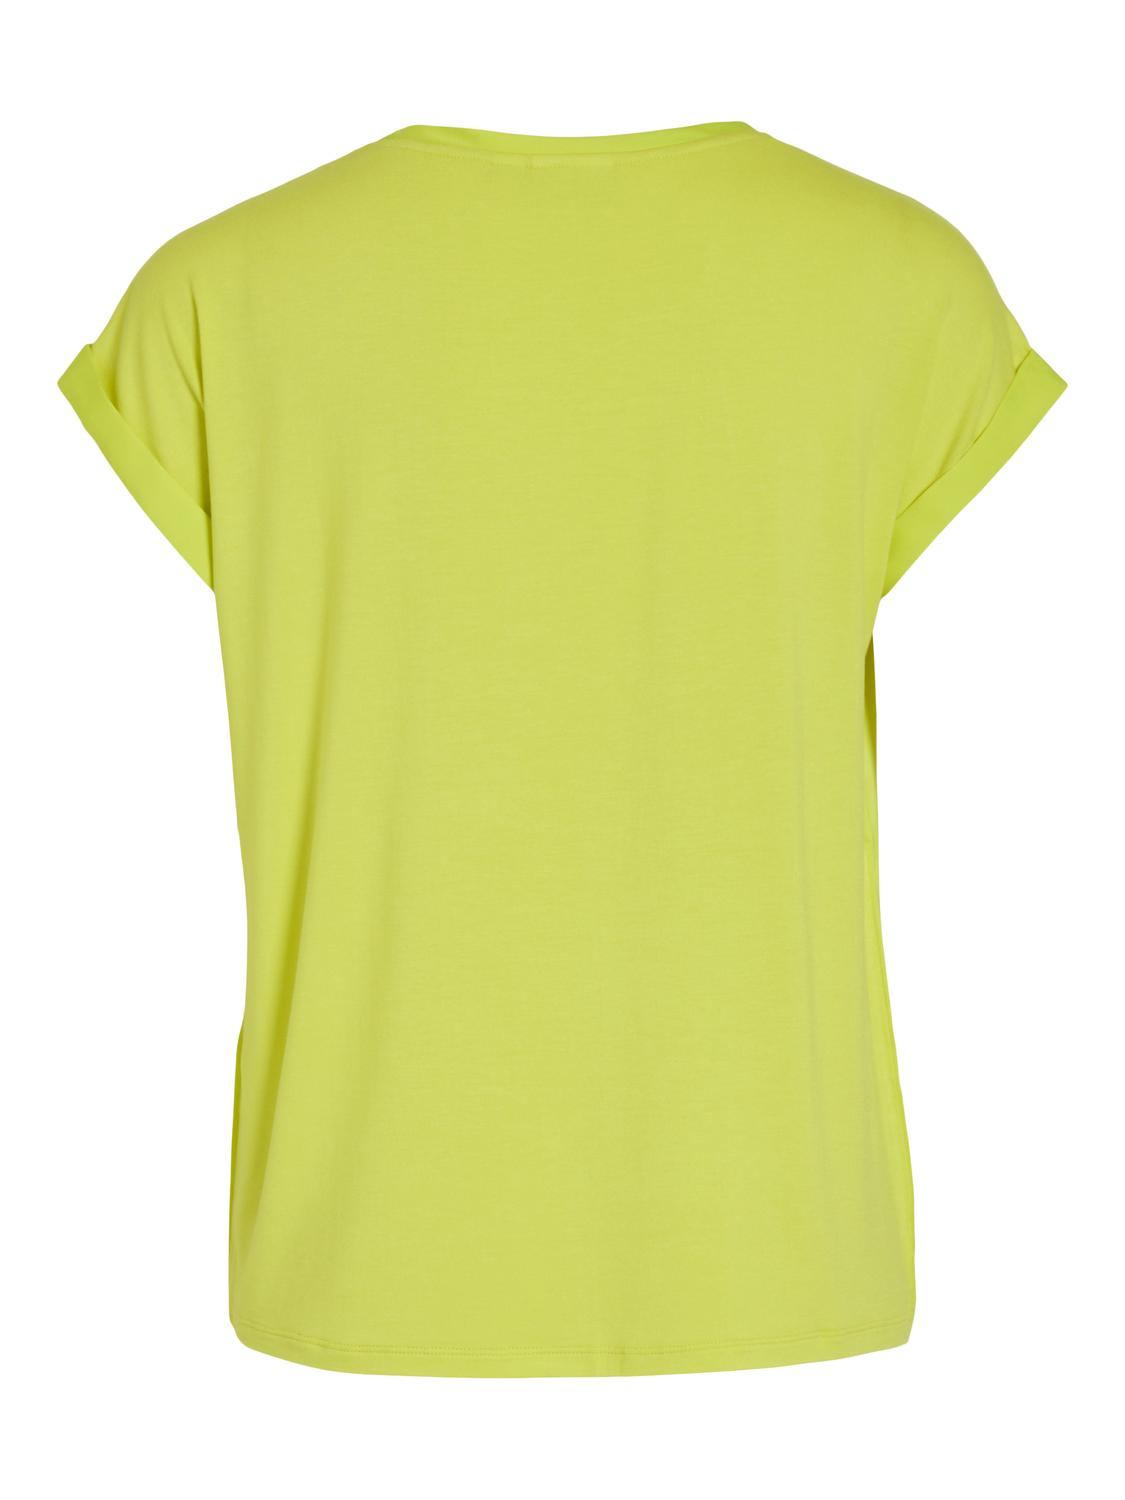 VIELLETTE T-Shirts & Tops - Sulphur Spring